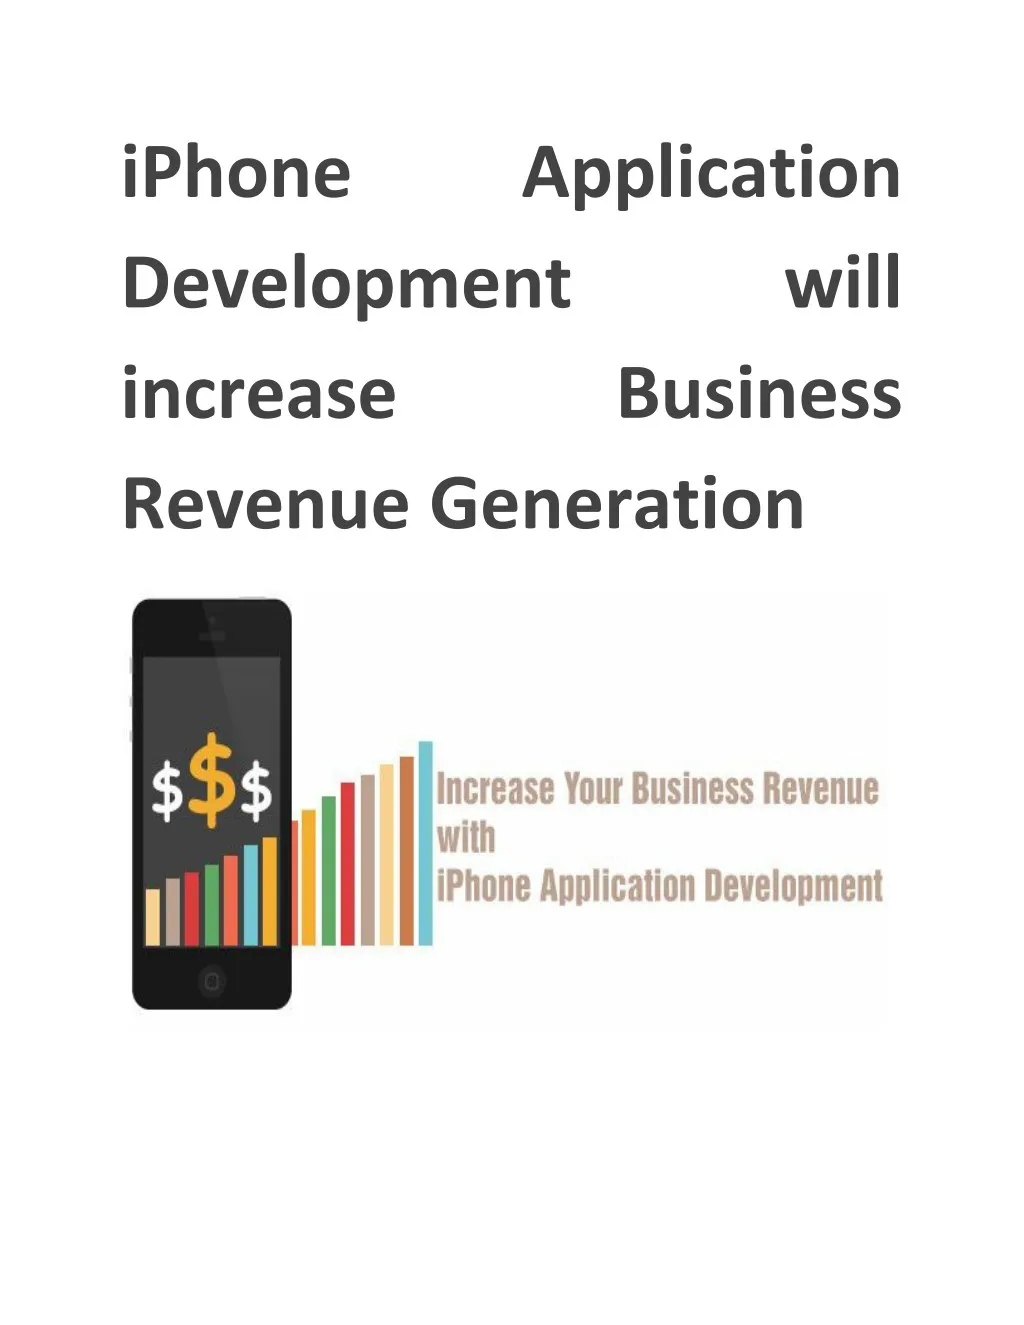 iphone development increase revenue generation